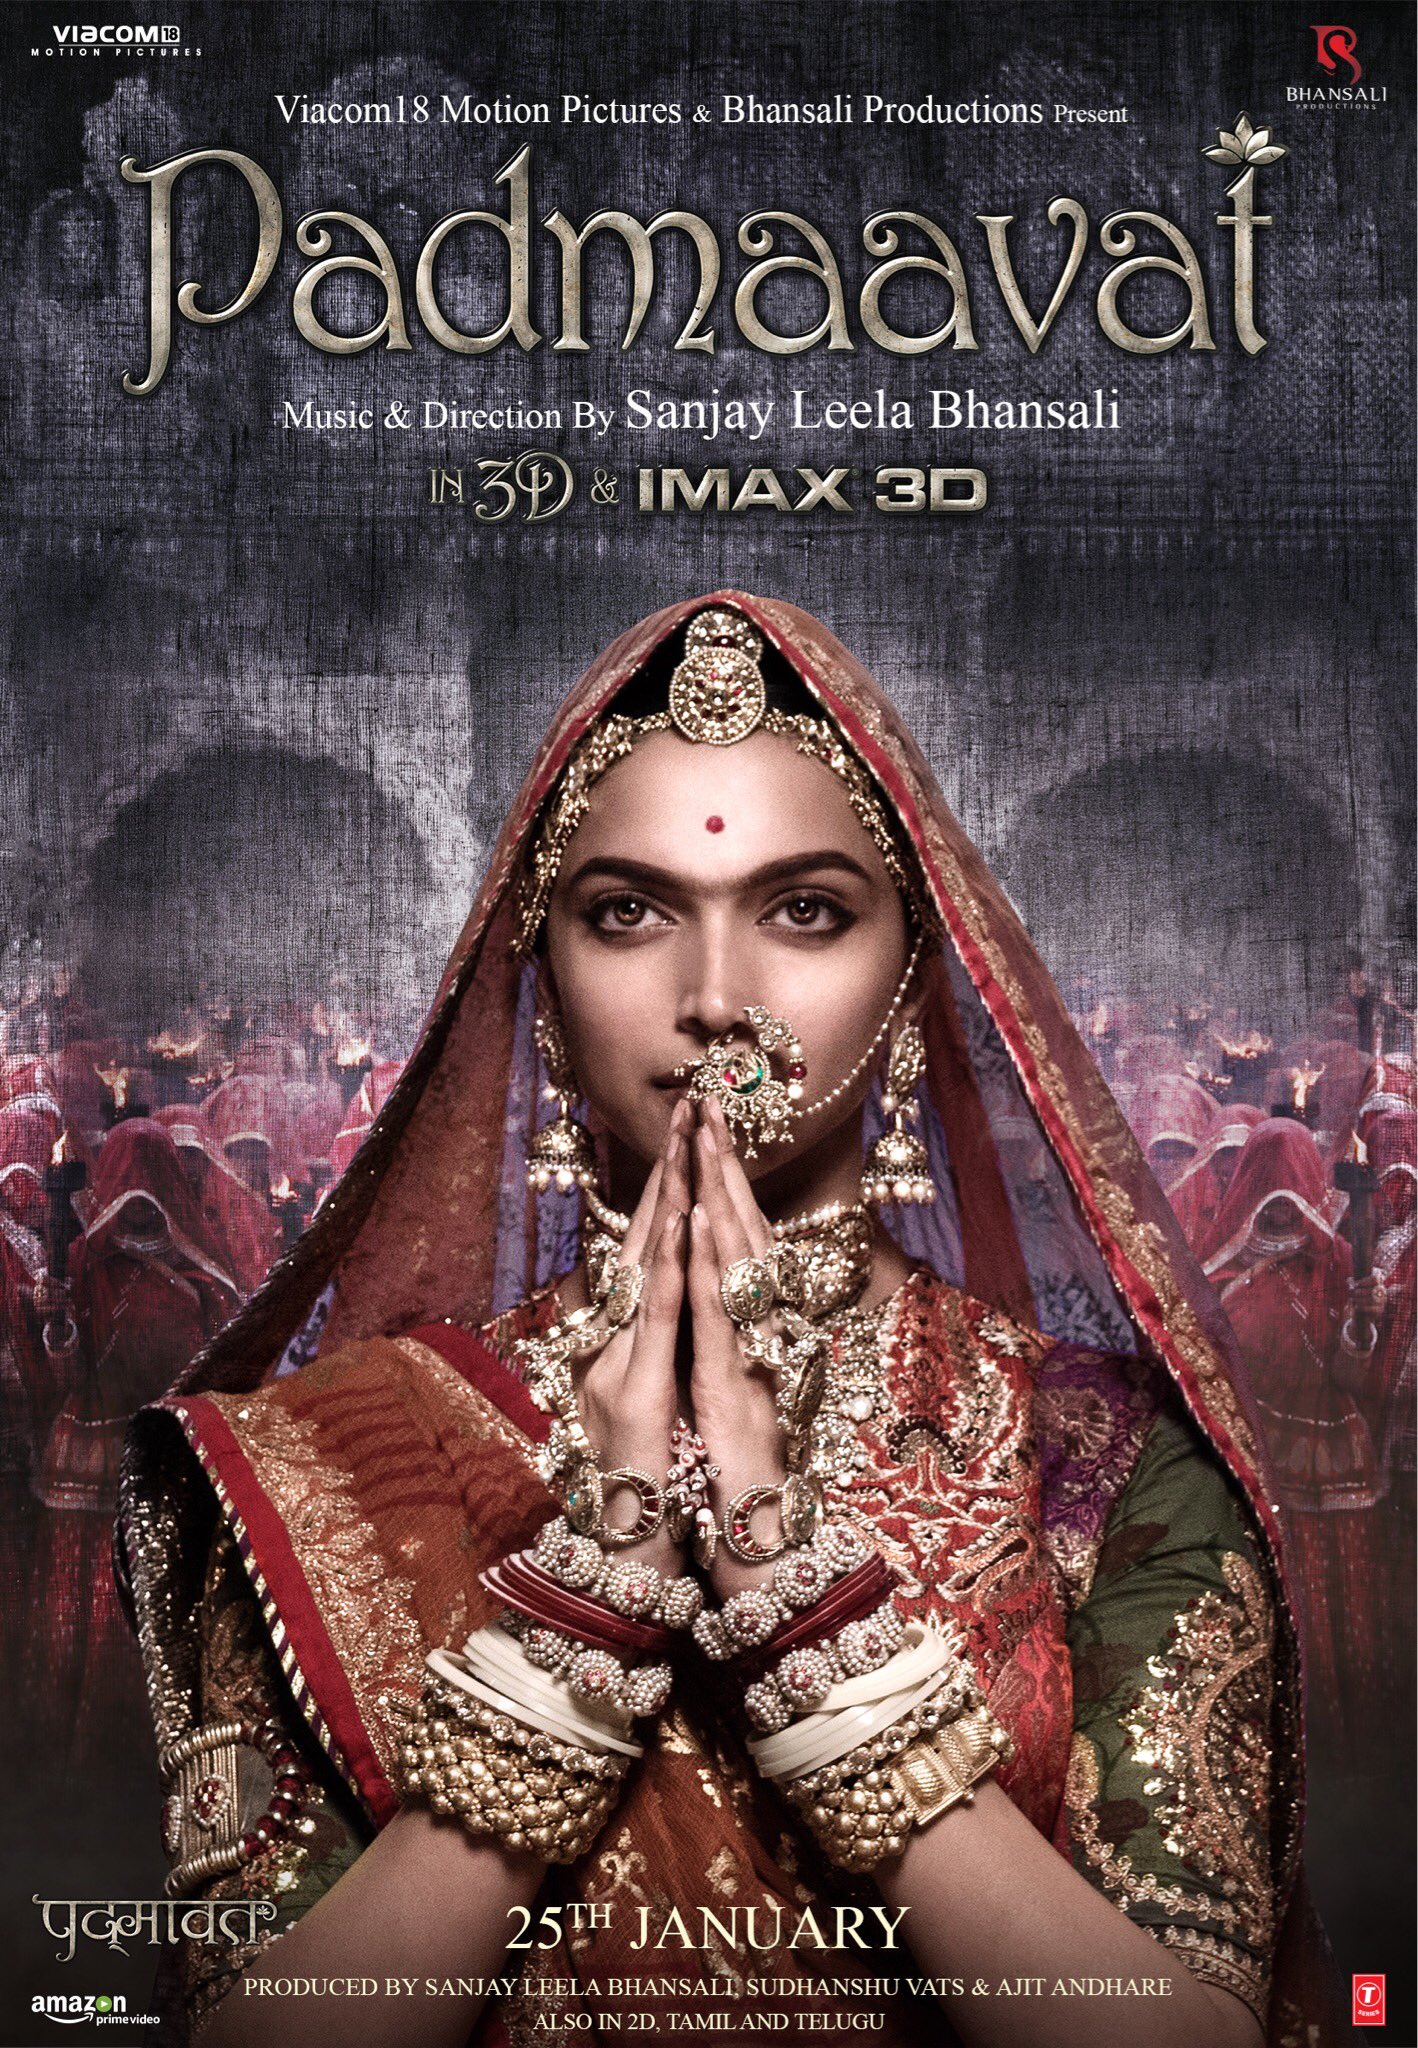 Nonton film Padmaavat layarkaca21 indoxx1 ganool online streaming terbaru